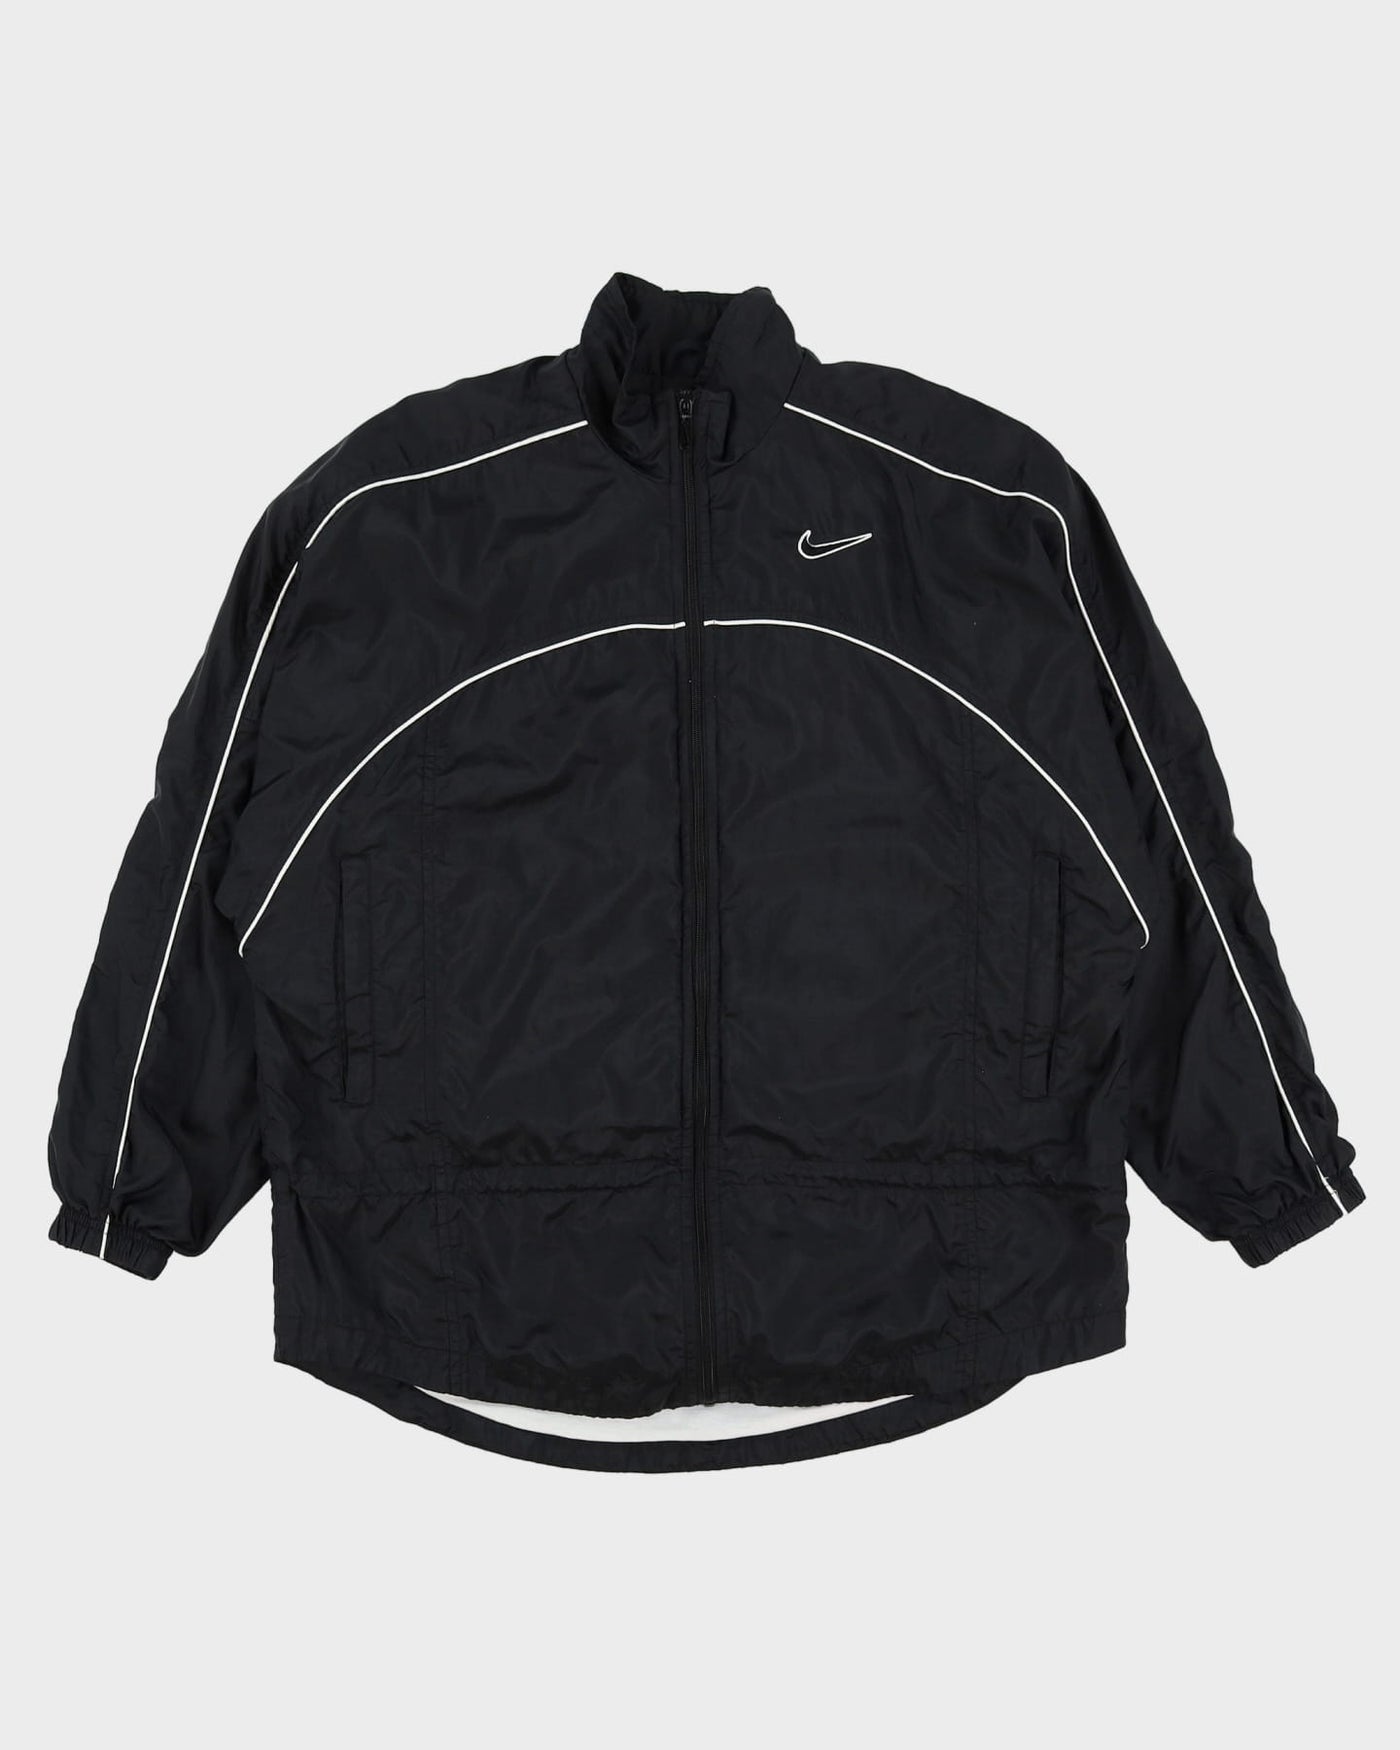 Vintage 90s Nike Black Windbreaker Jacket - M